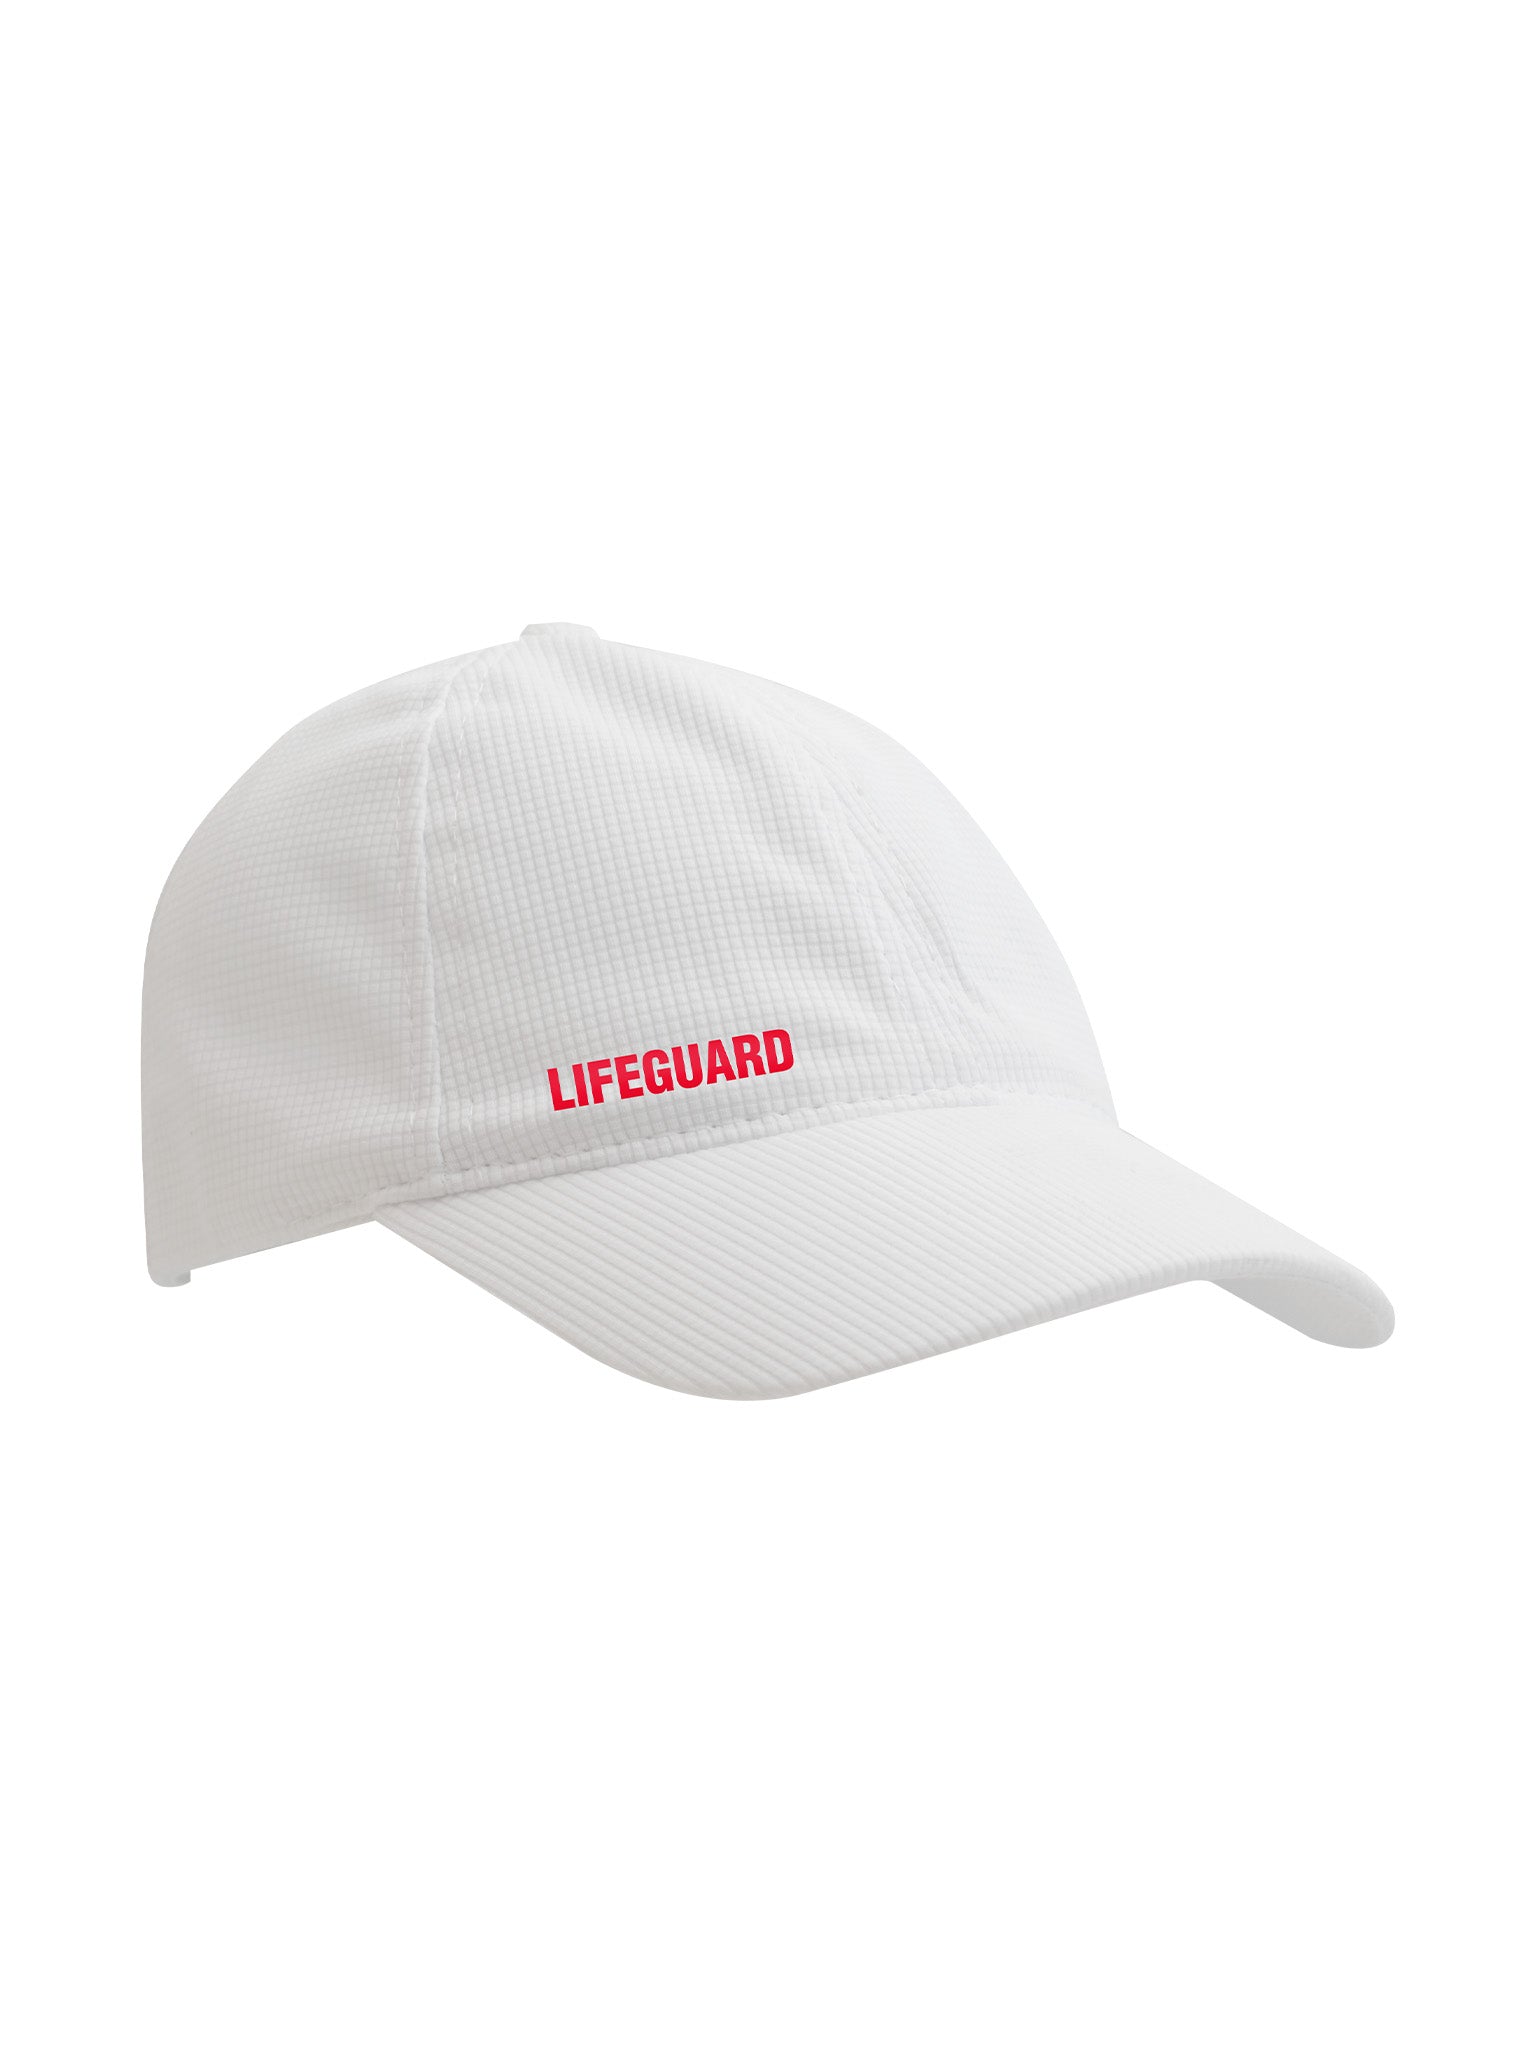 Technical Cap Lifeguard - White